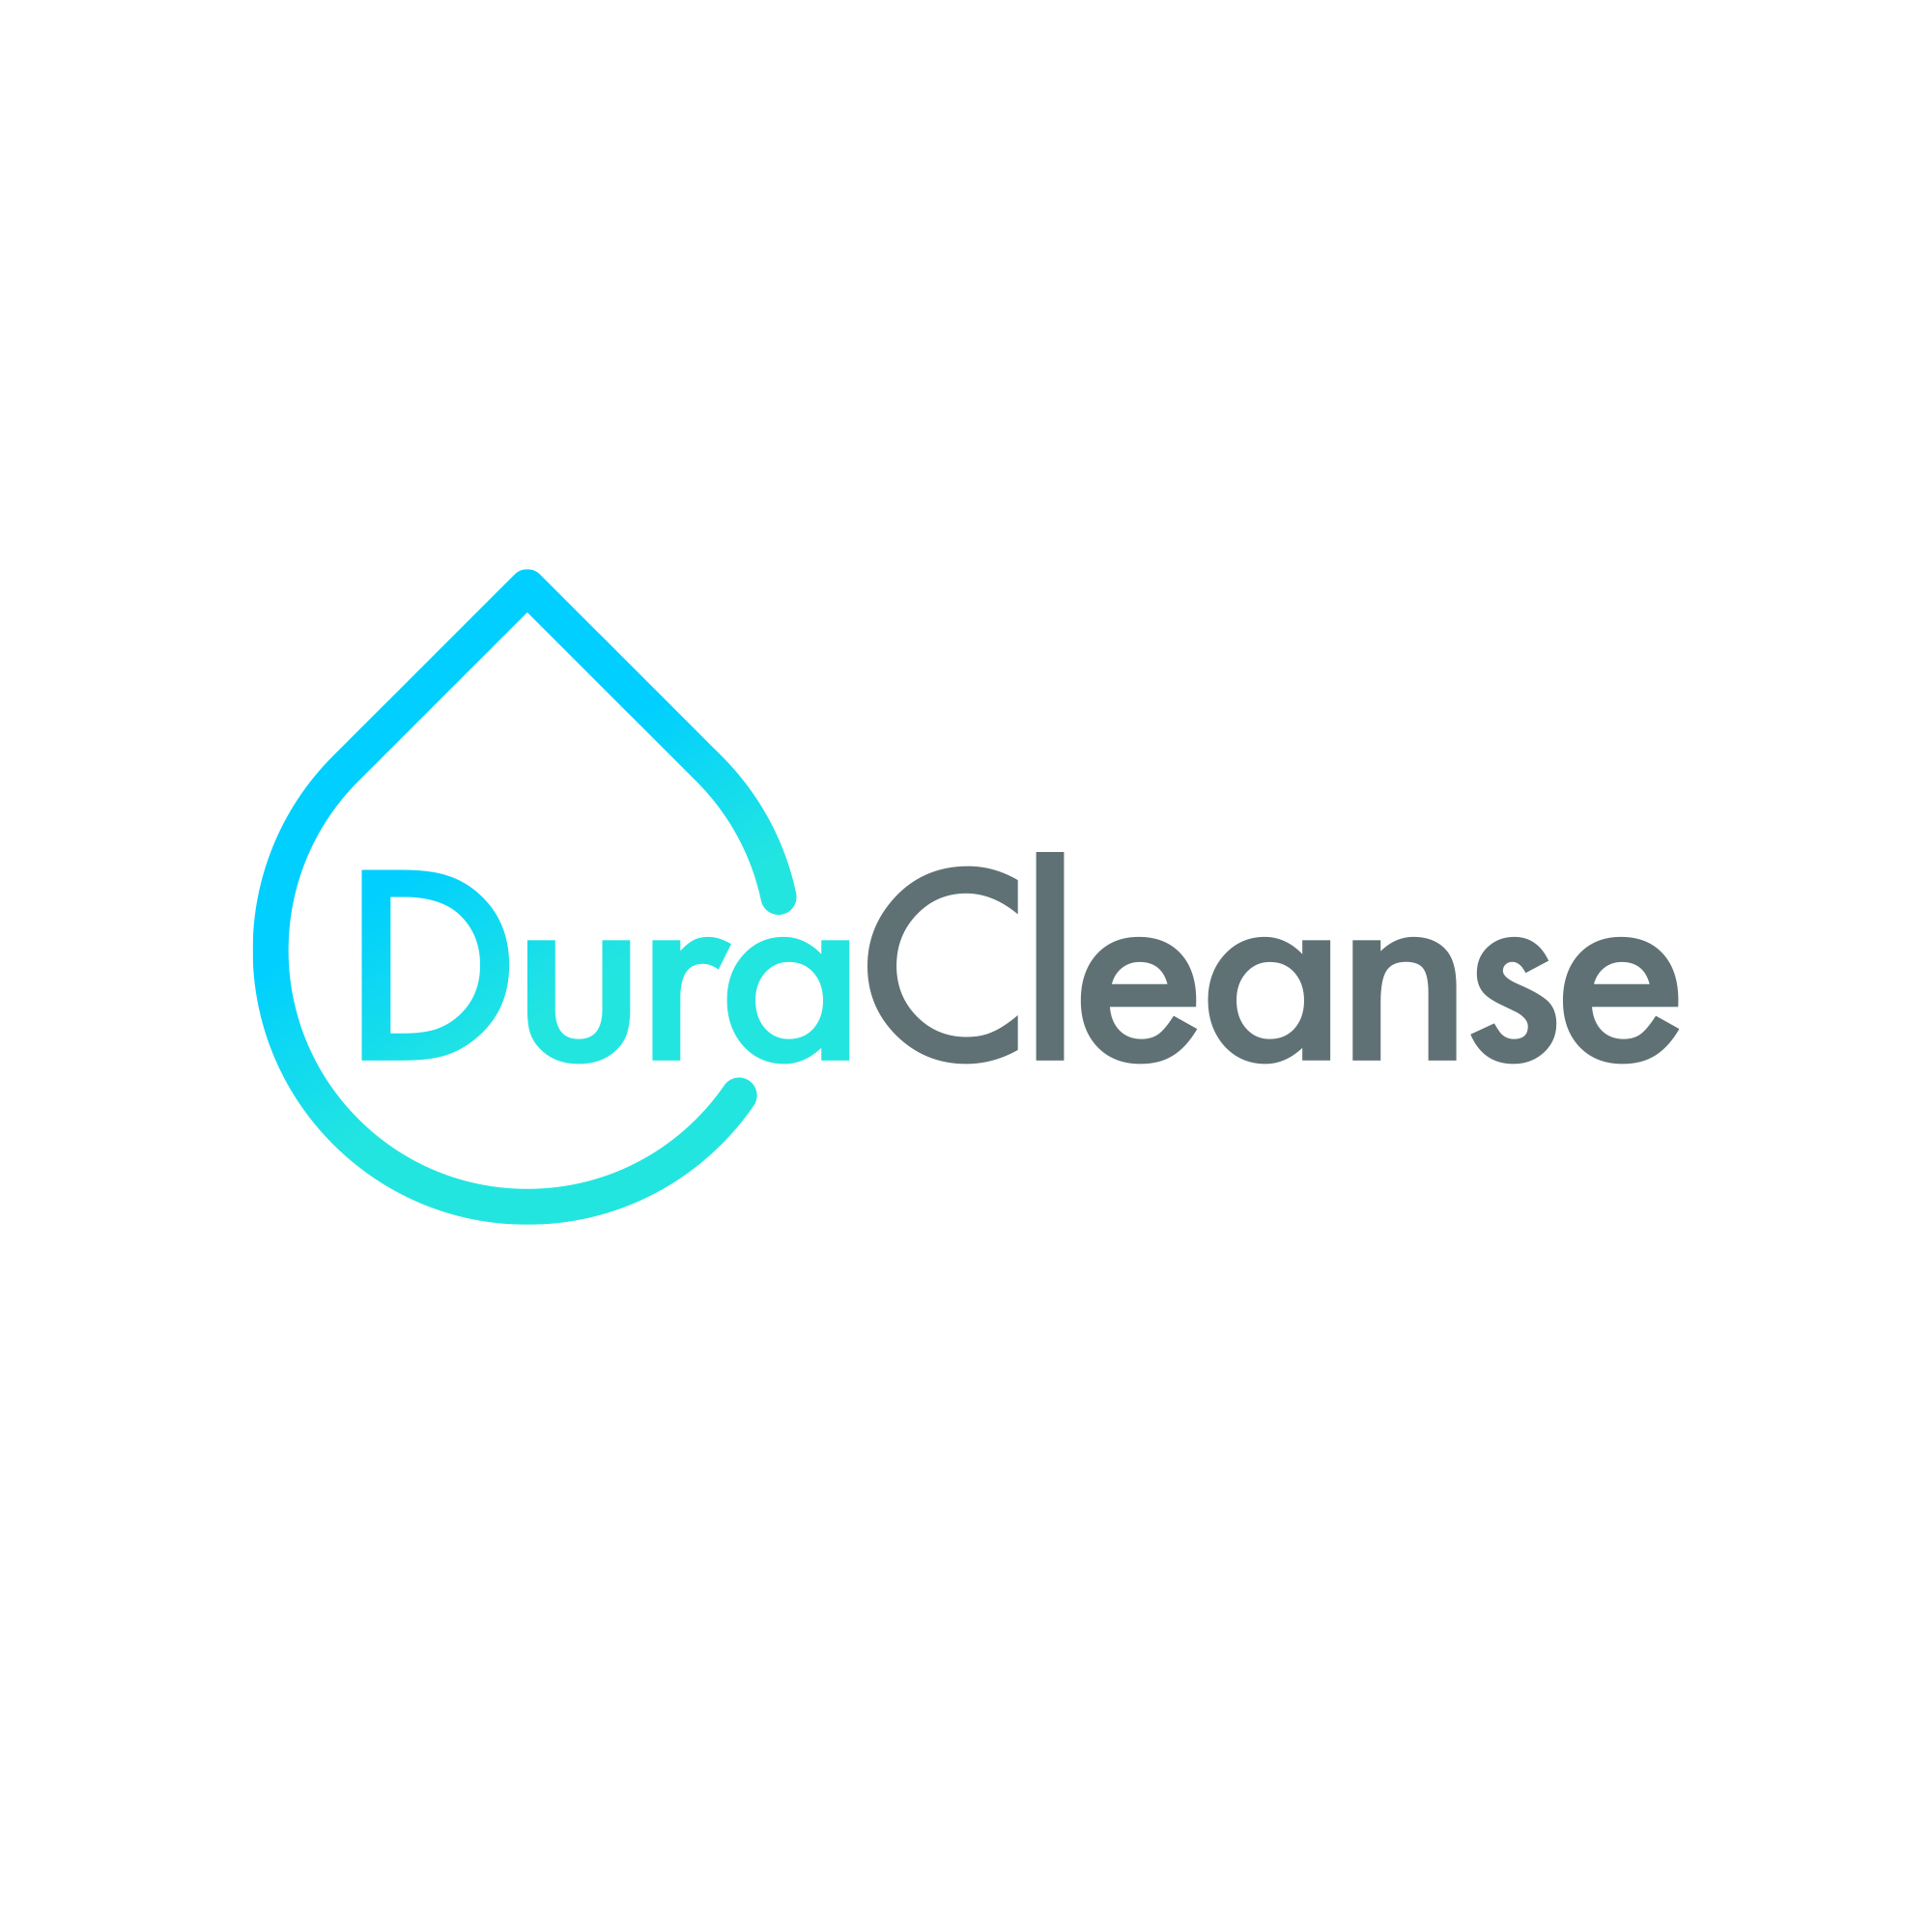 DuraCleanse Hand Sanitizer Dispenser